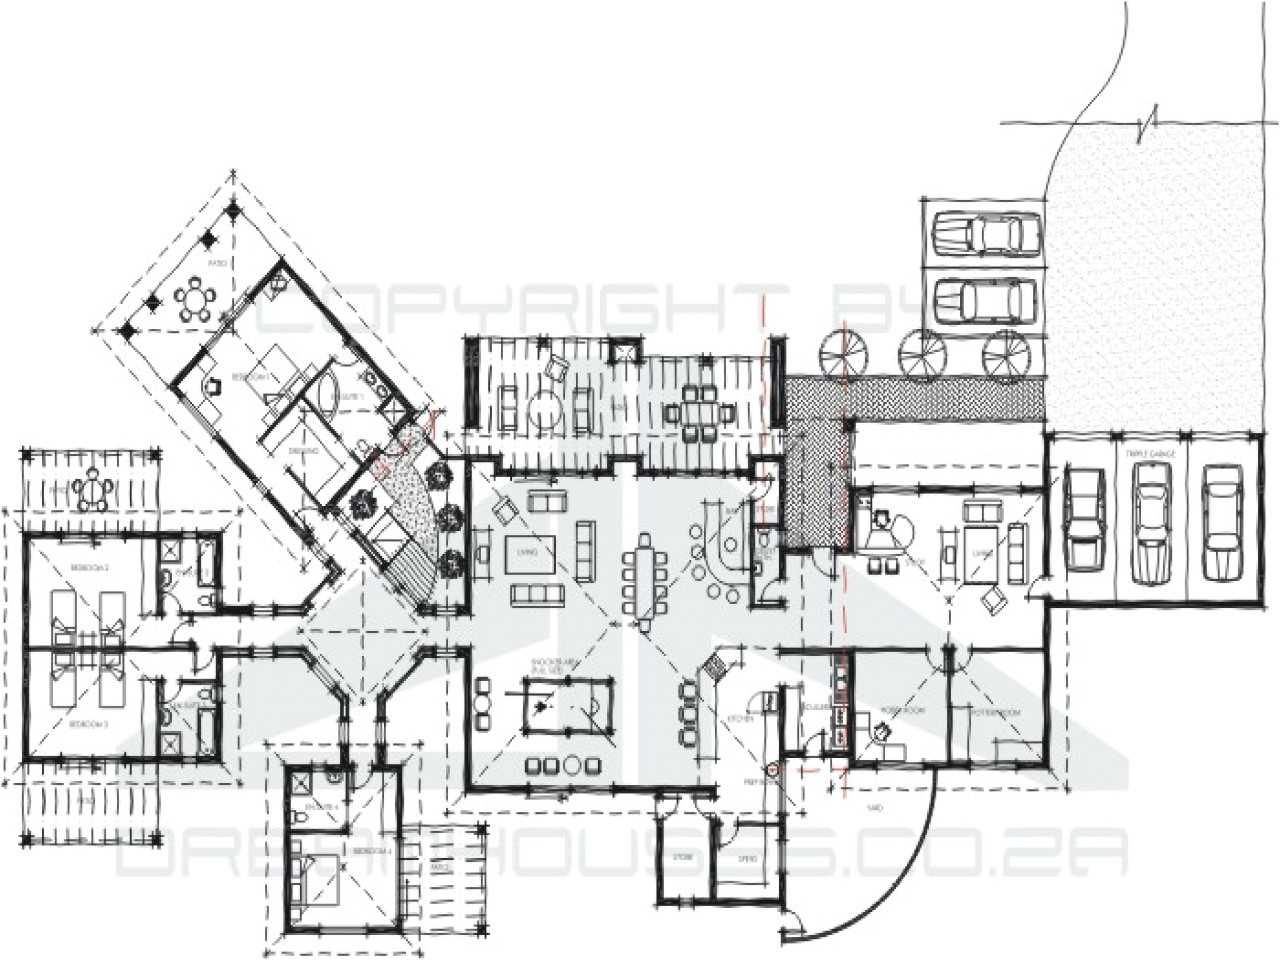 8e61becb58ba6f37 detached guest house floor plans guest house floor plan